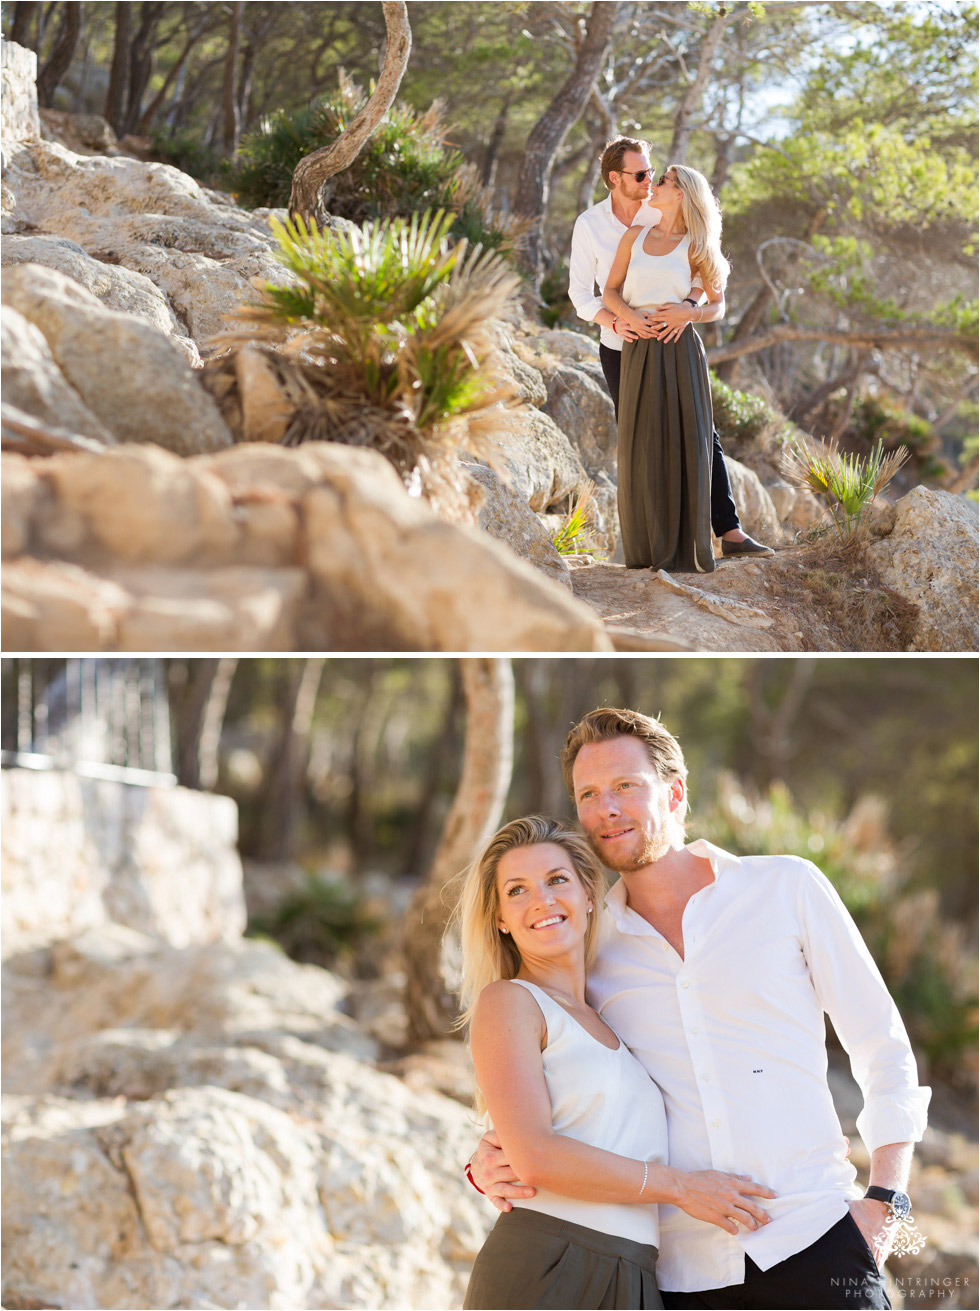 Sunset Couple Shoot in Mallorca | Katrin & Manuel | Cala Conills, Majorca - Blog of Nina Hintringer Photography - Wedding Photography, Wedding Reportage and Destination Weddings